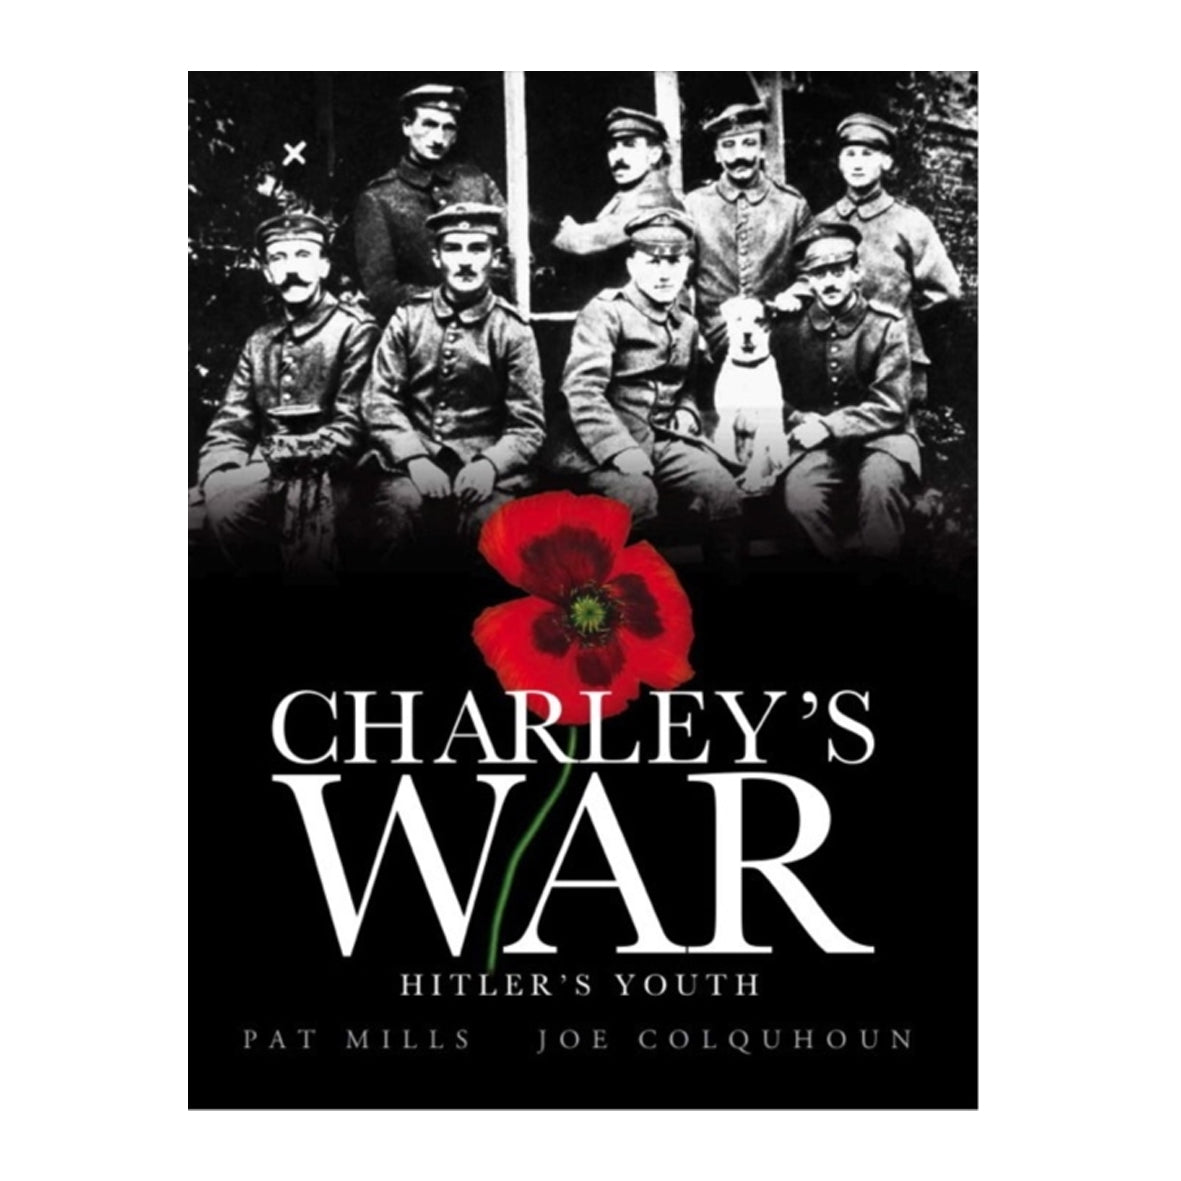 Book - Charley's War Hitler's Youth